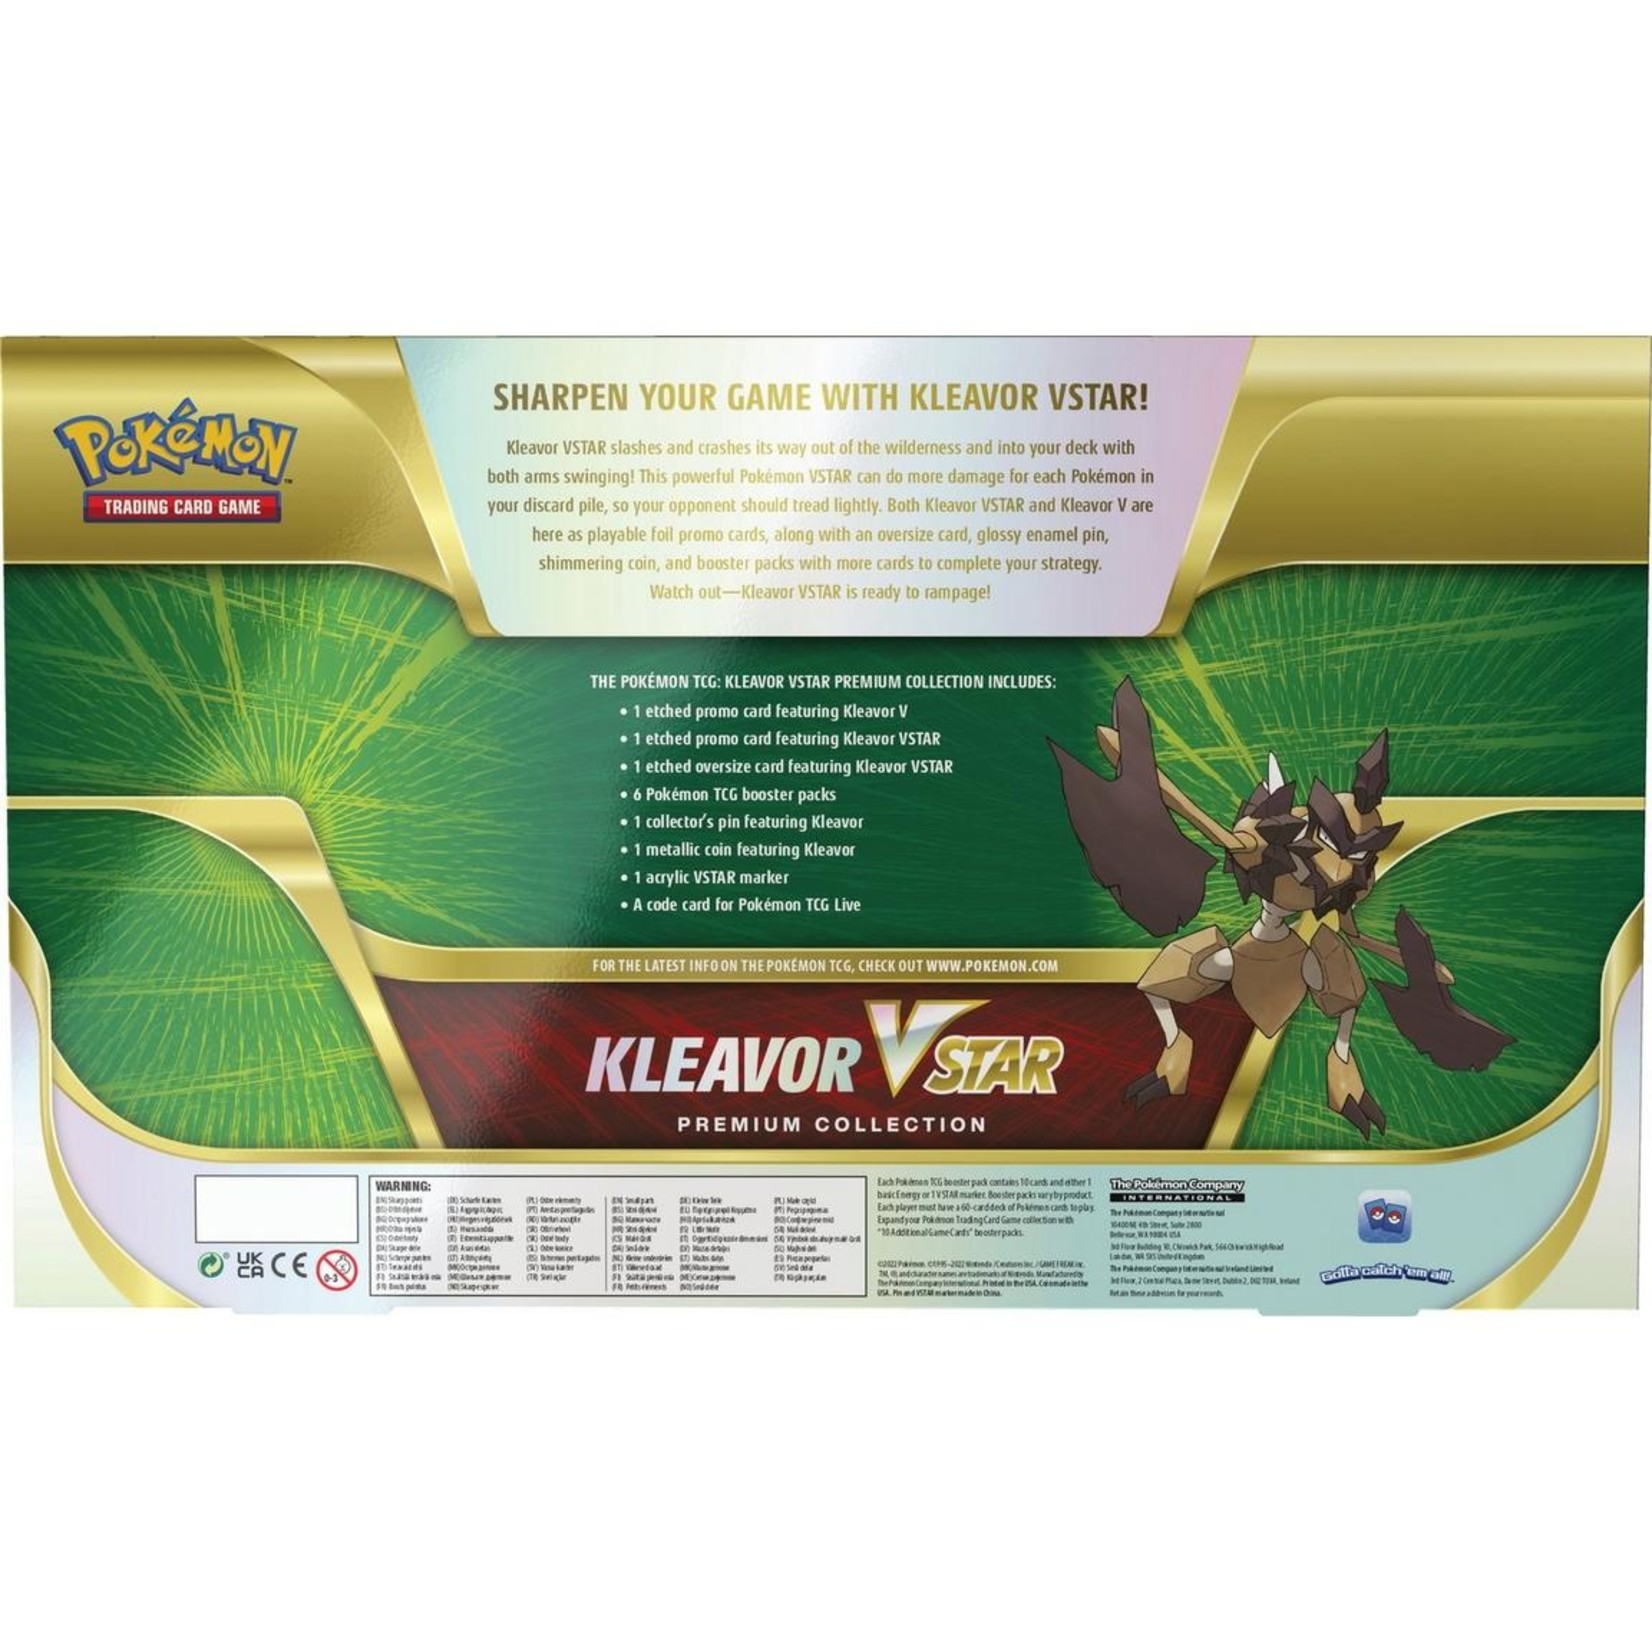 Pokémon Pokémon Kleavor VStar Premium Collection